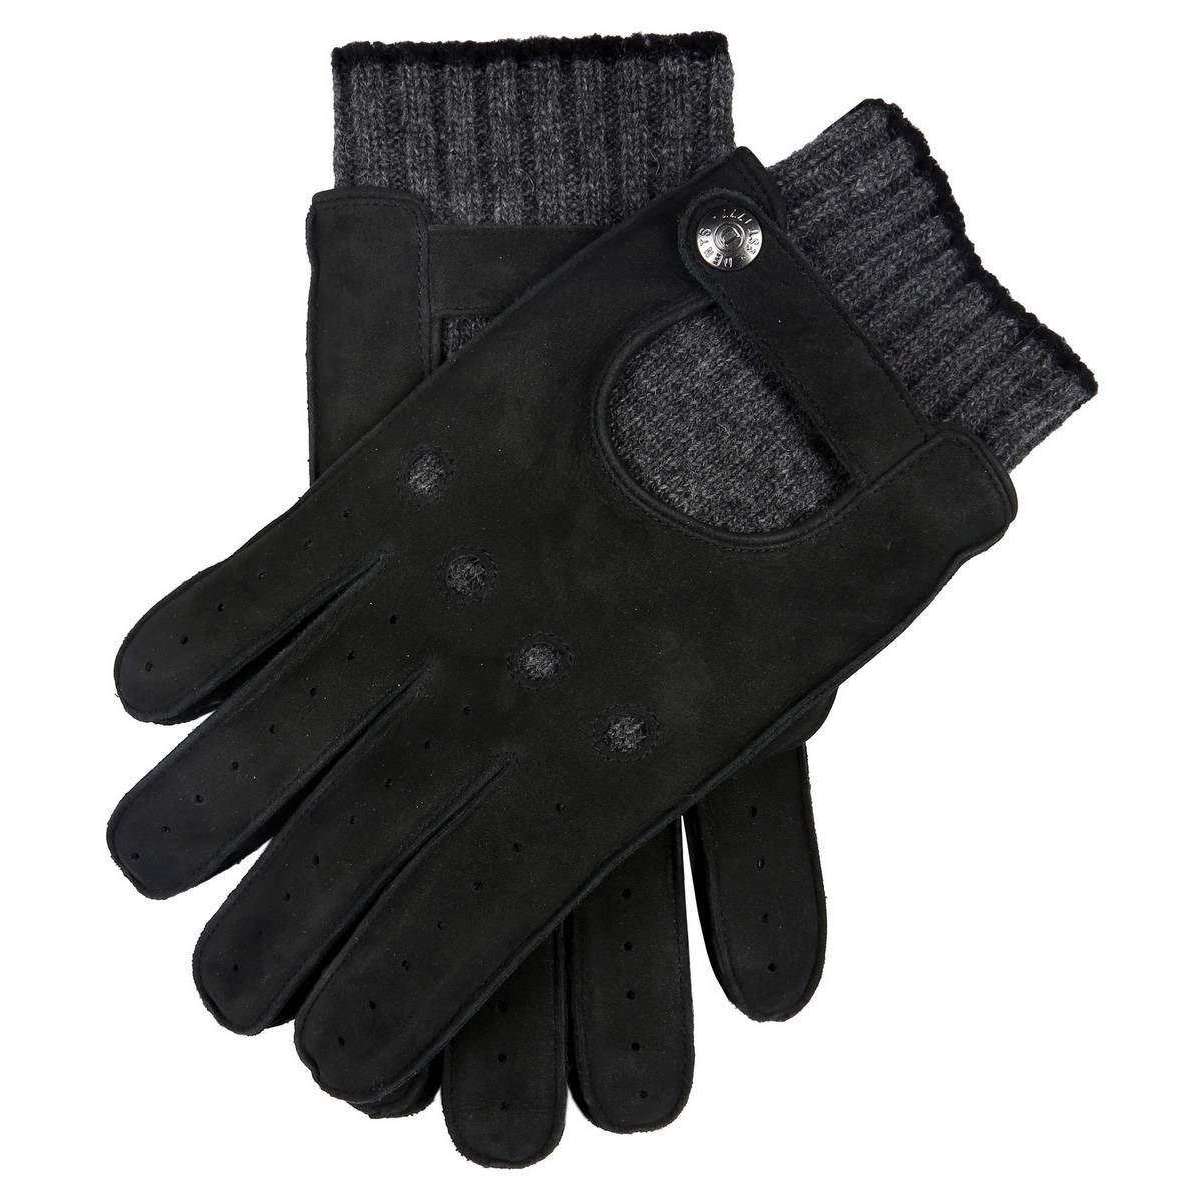 Dents Hambledon Water Resistant Gloves - Black/Charcoal